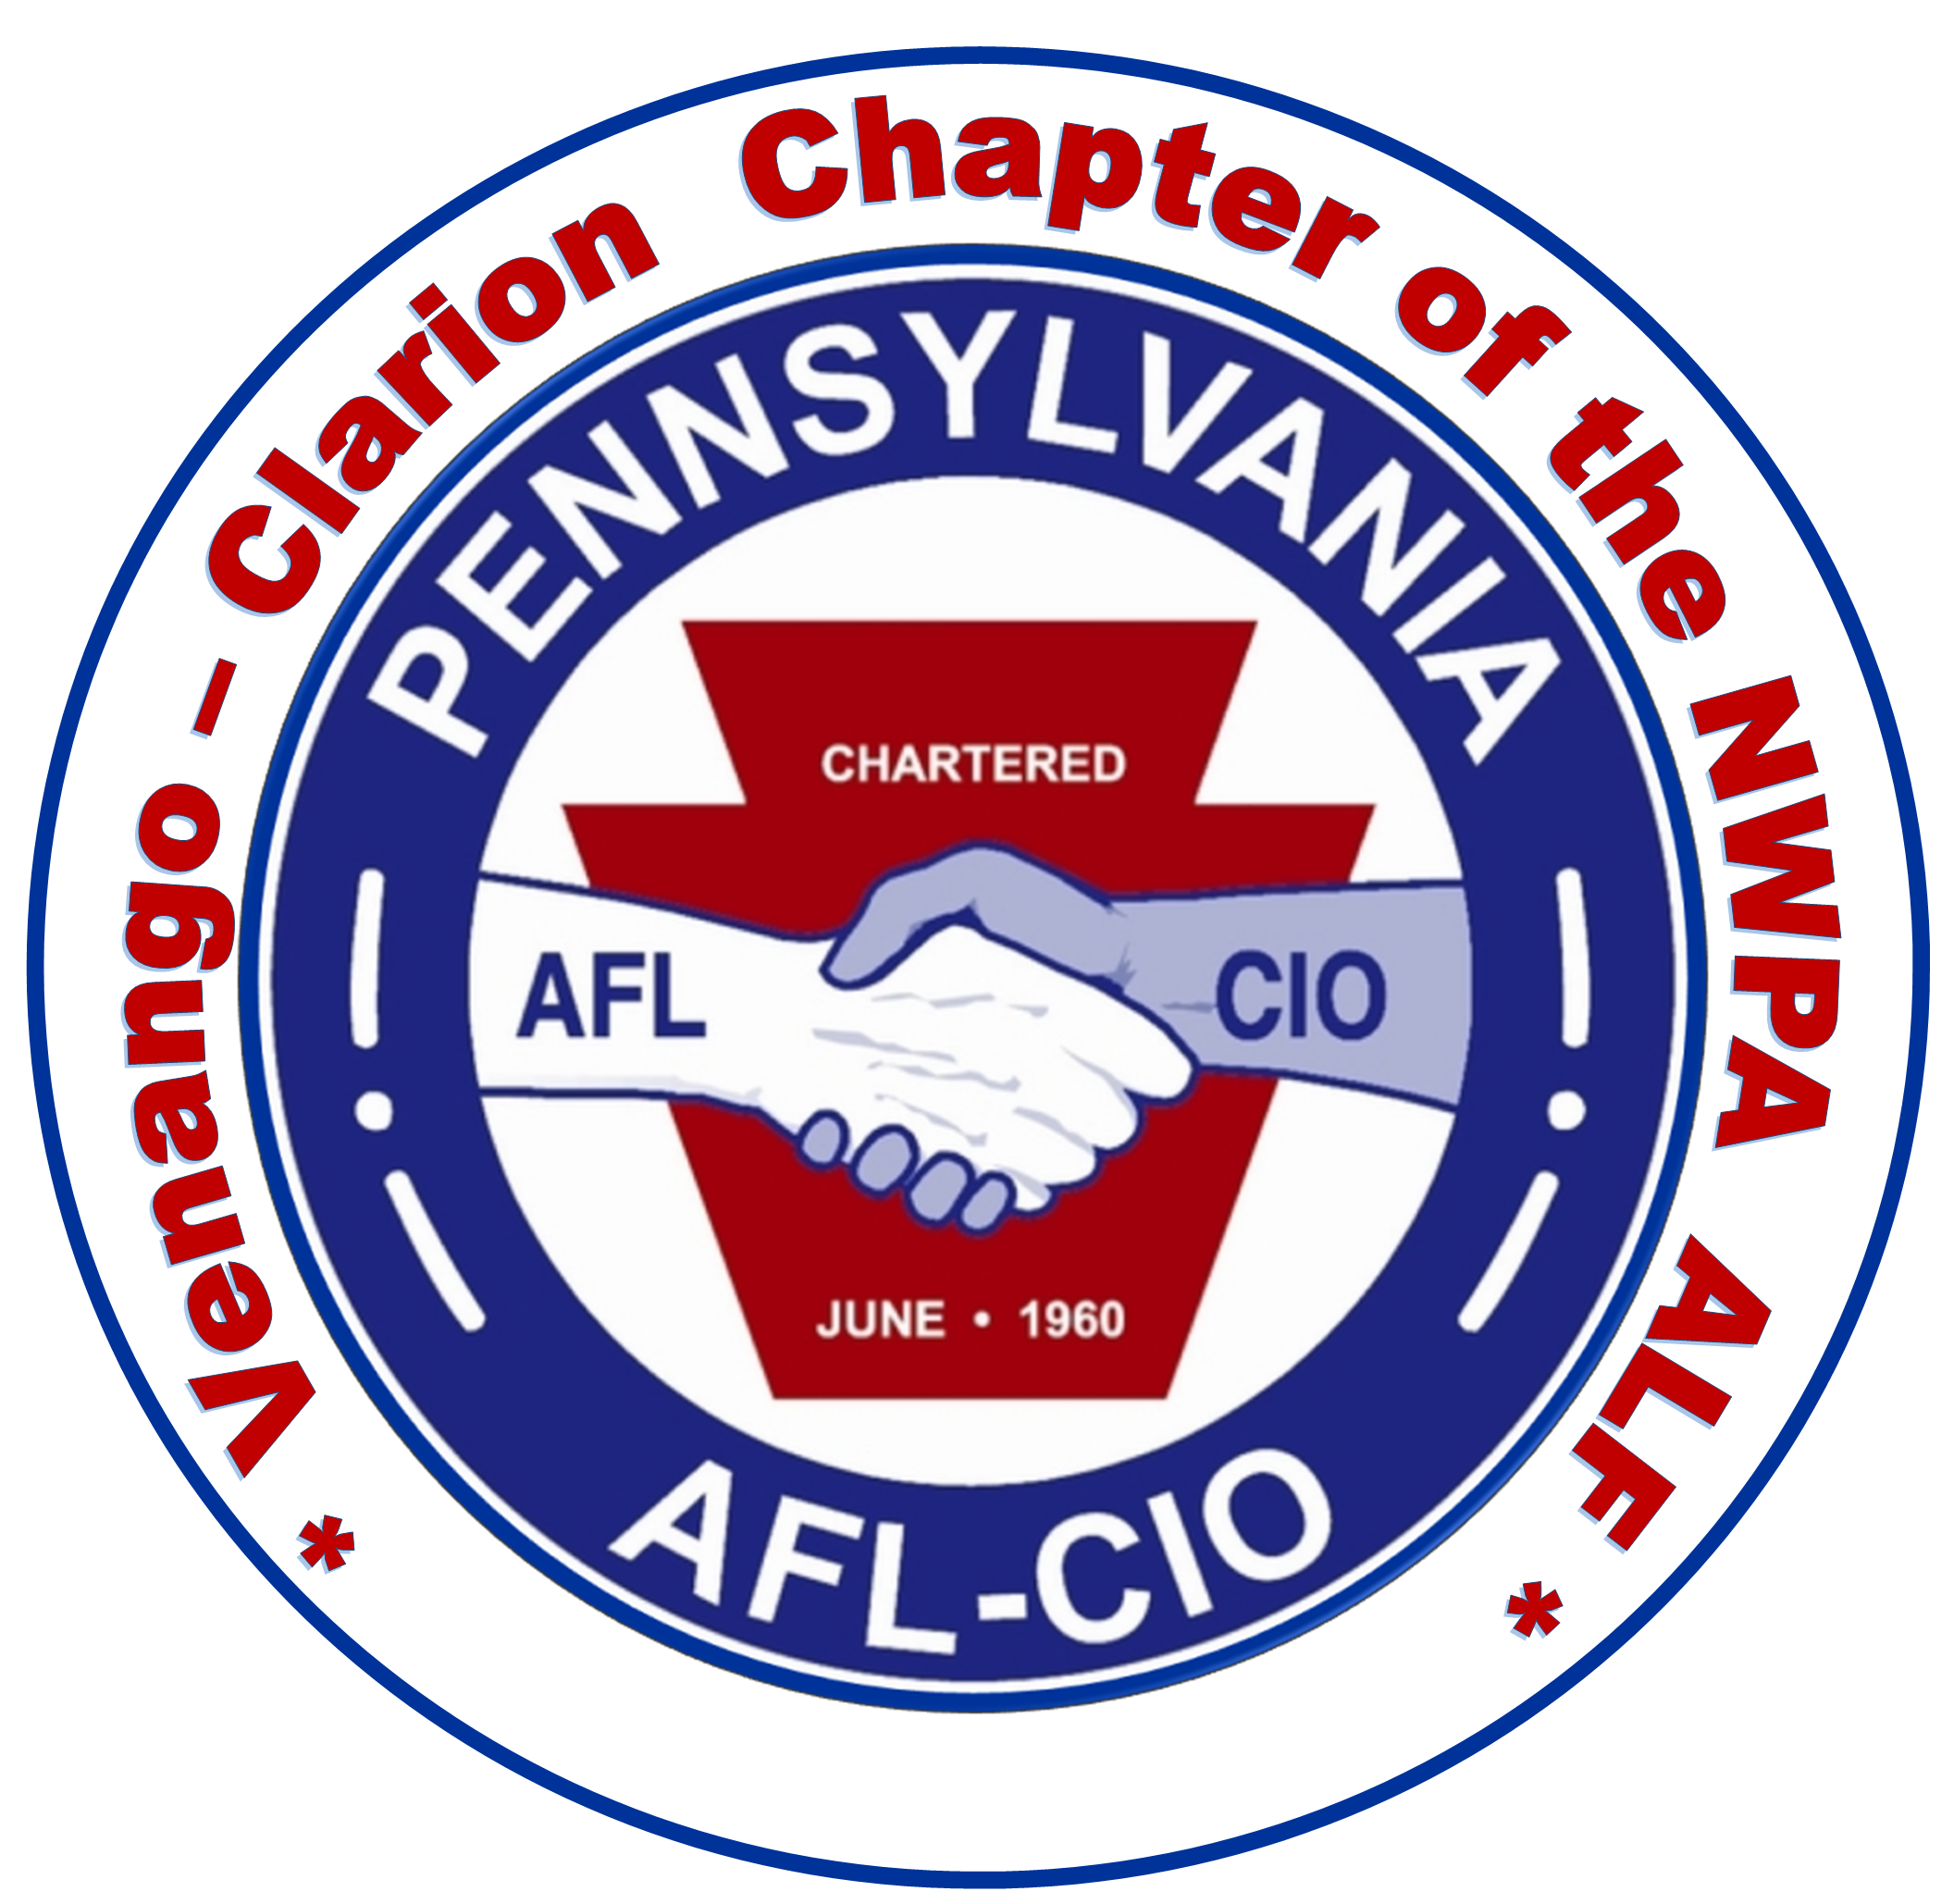 Venango-Clarion Chapter Labor Council, AFL-CIO